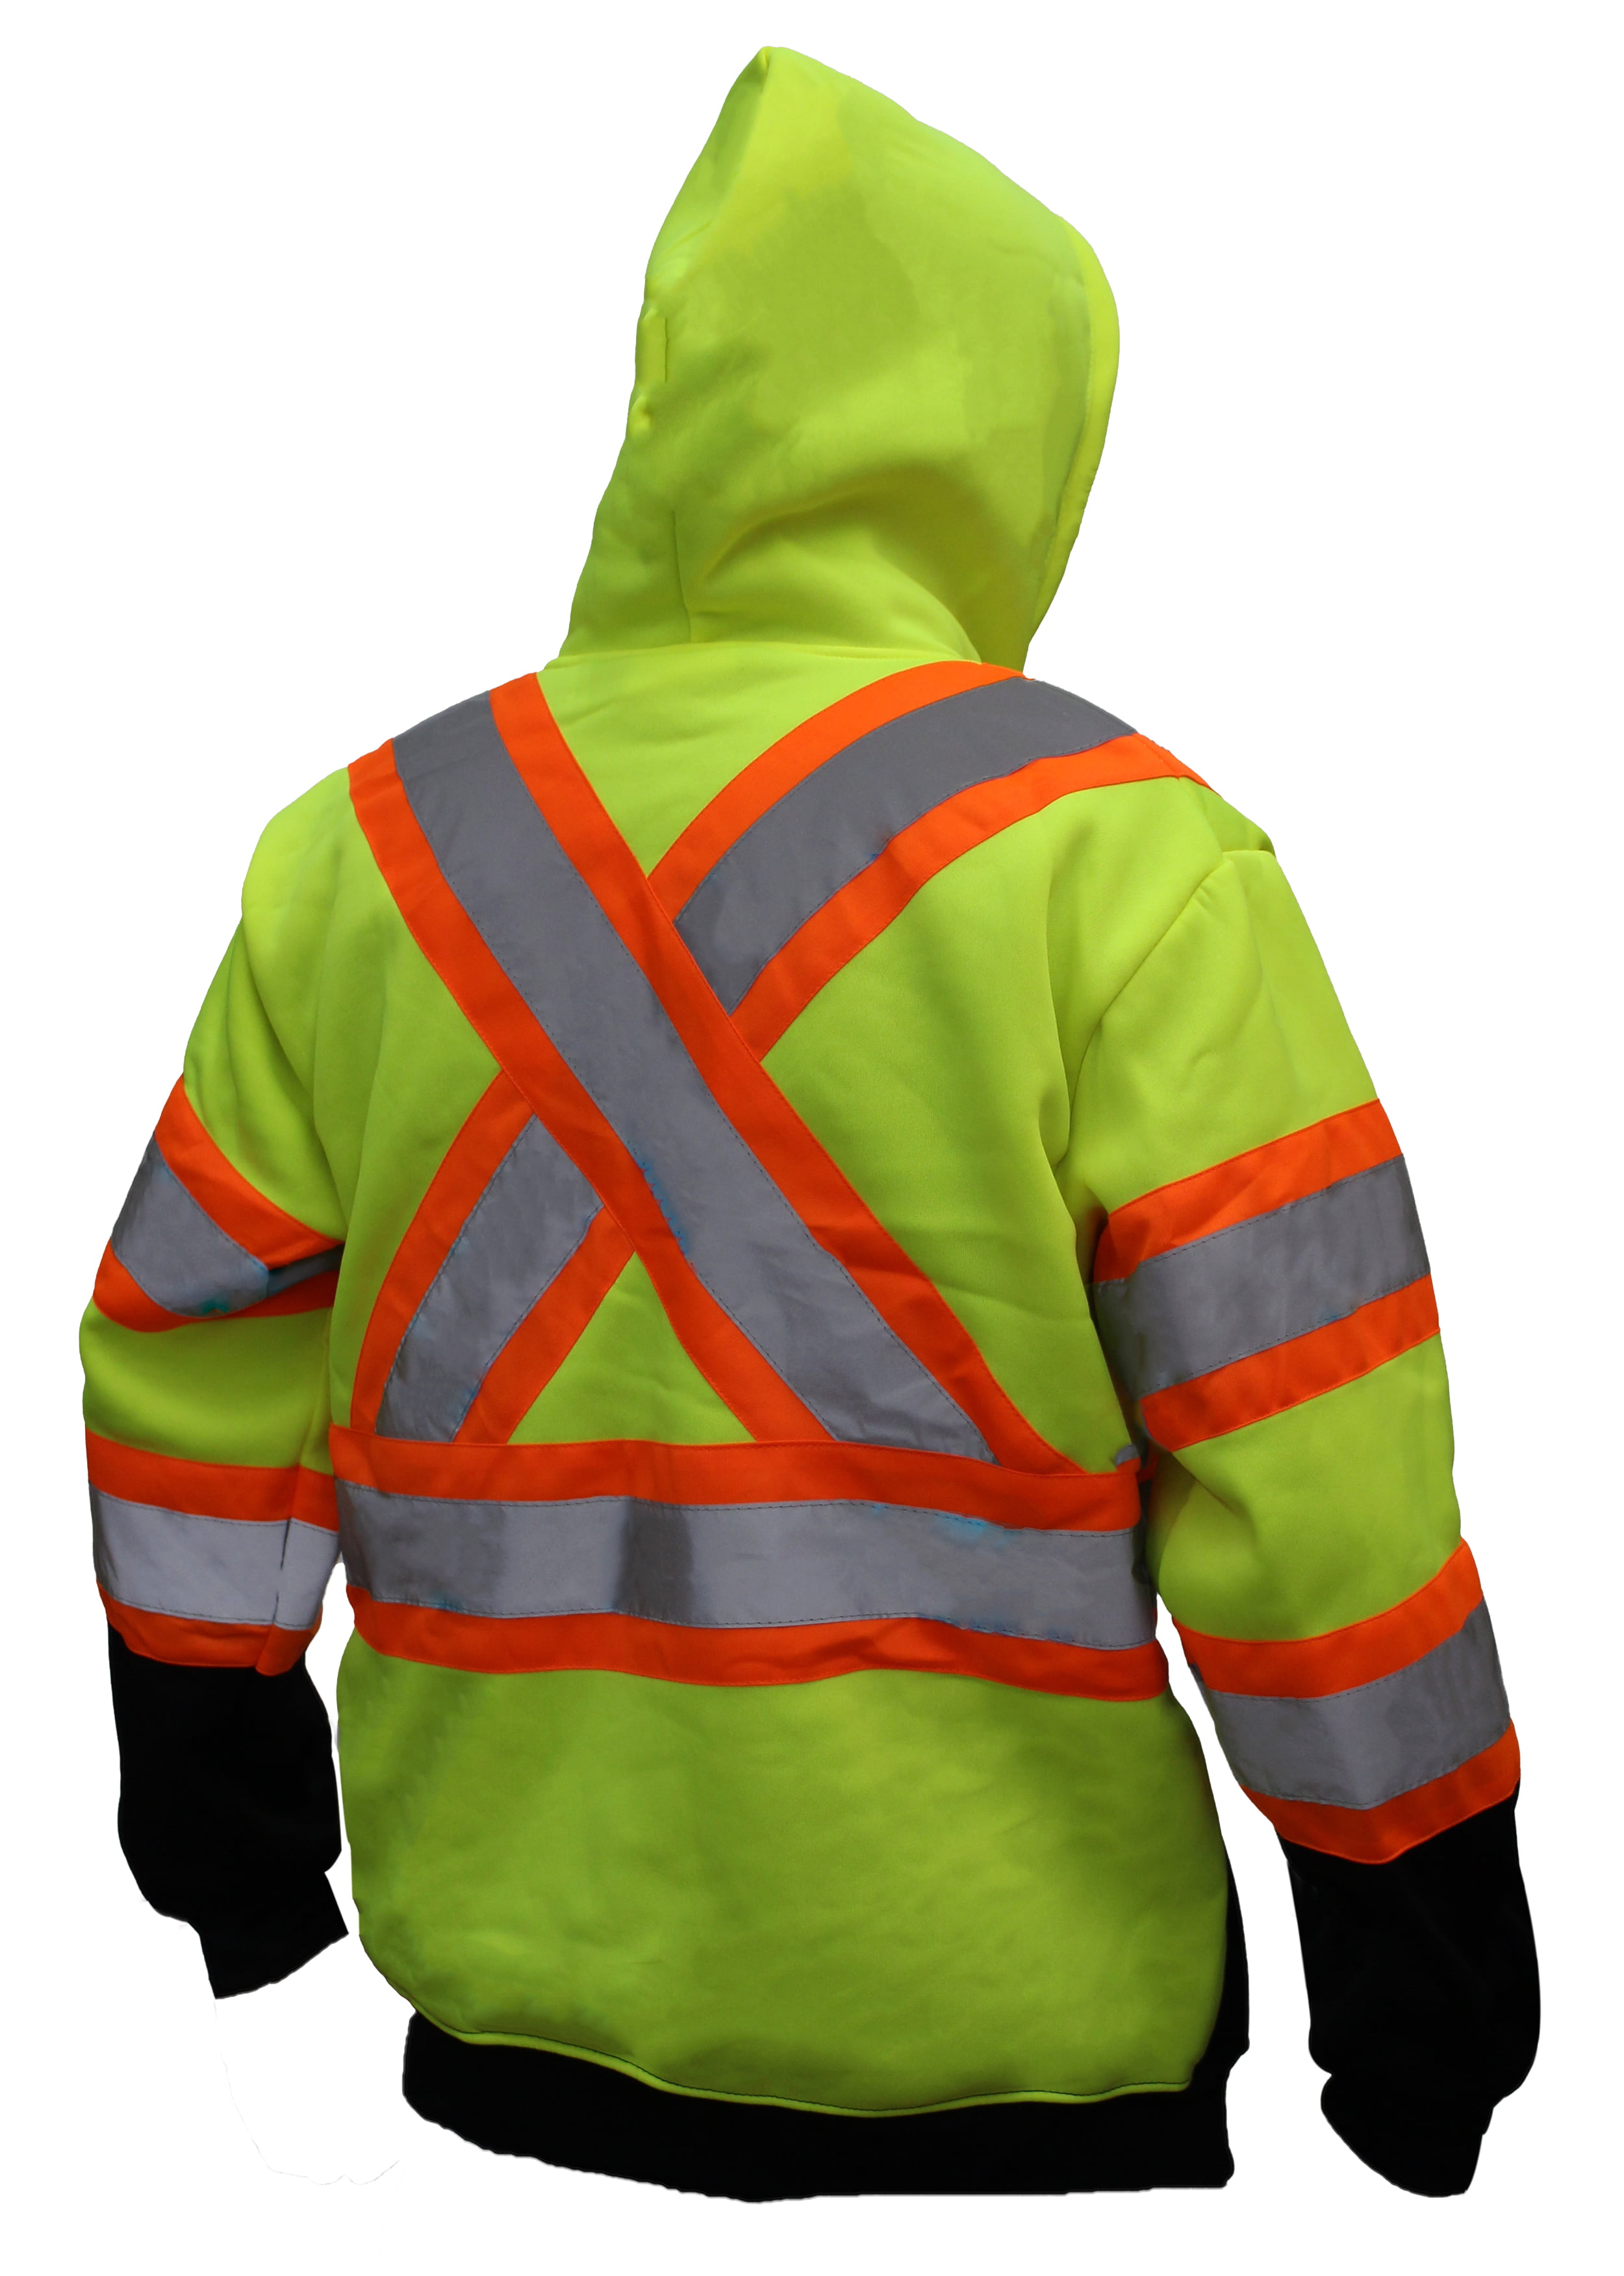 New York Hi-Viz Workwear HX7012 Men's ANSI Class High Visibility Class  Sweatshirt, Full Zip Hooded, Lightweight, Black Bottom with X  pattern(Large, Lime)